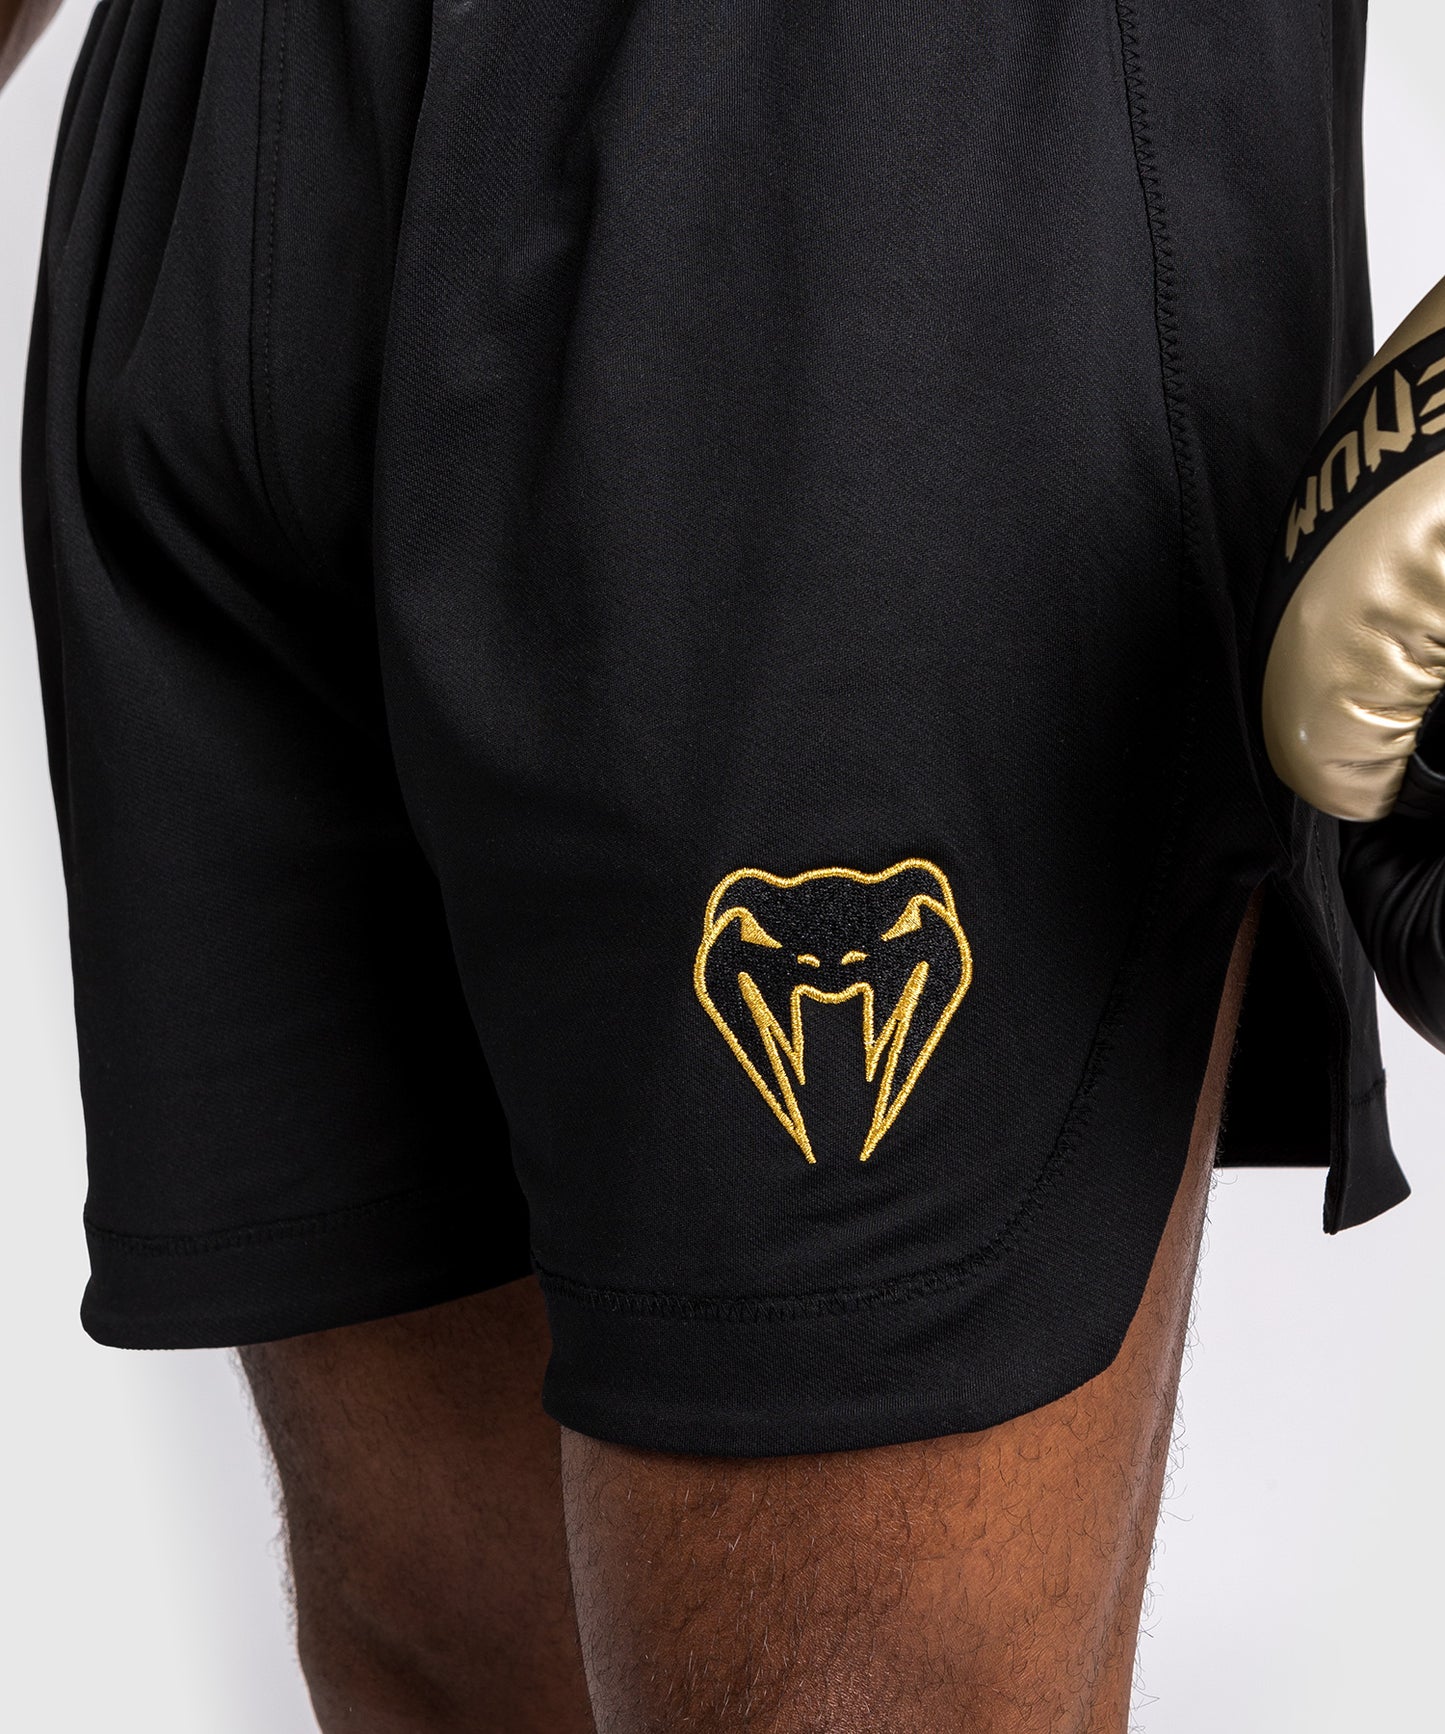 Venum Classic Boxing Shorts - Black/Gold